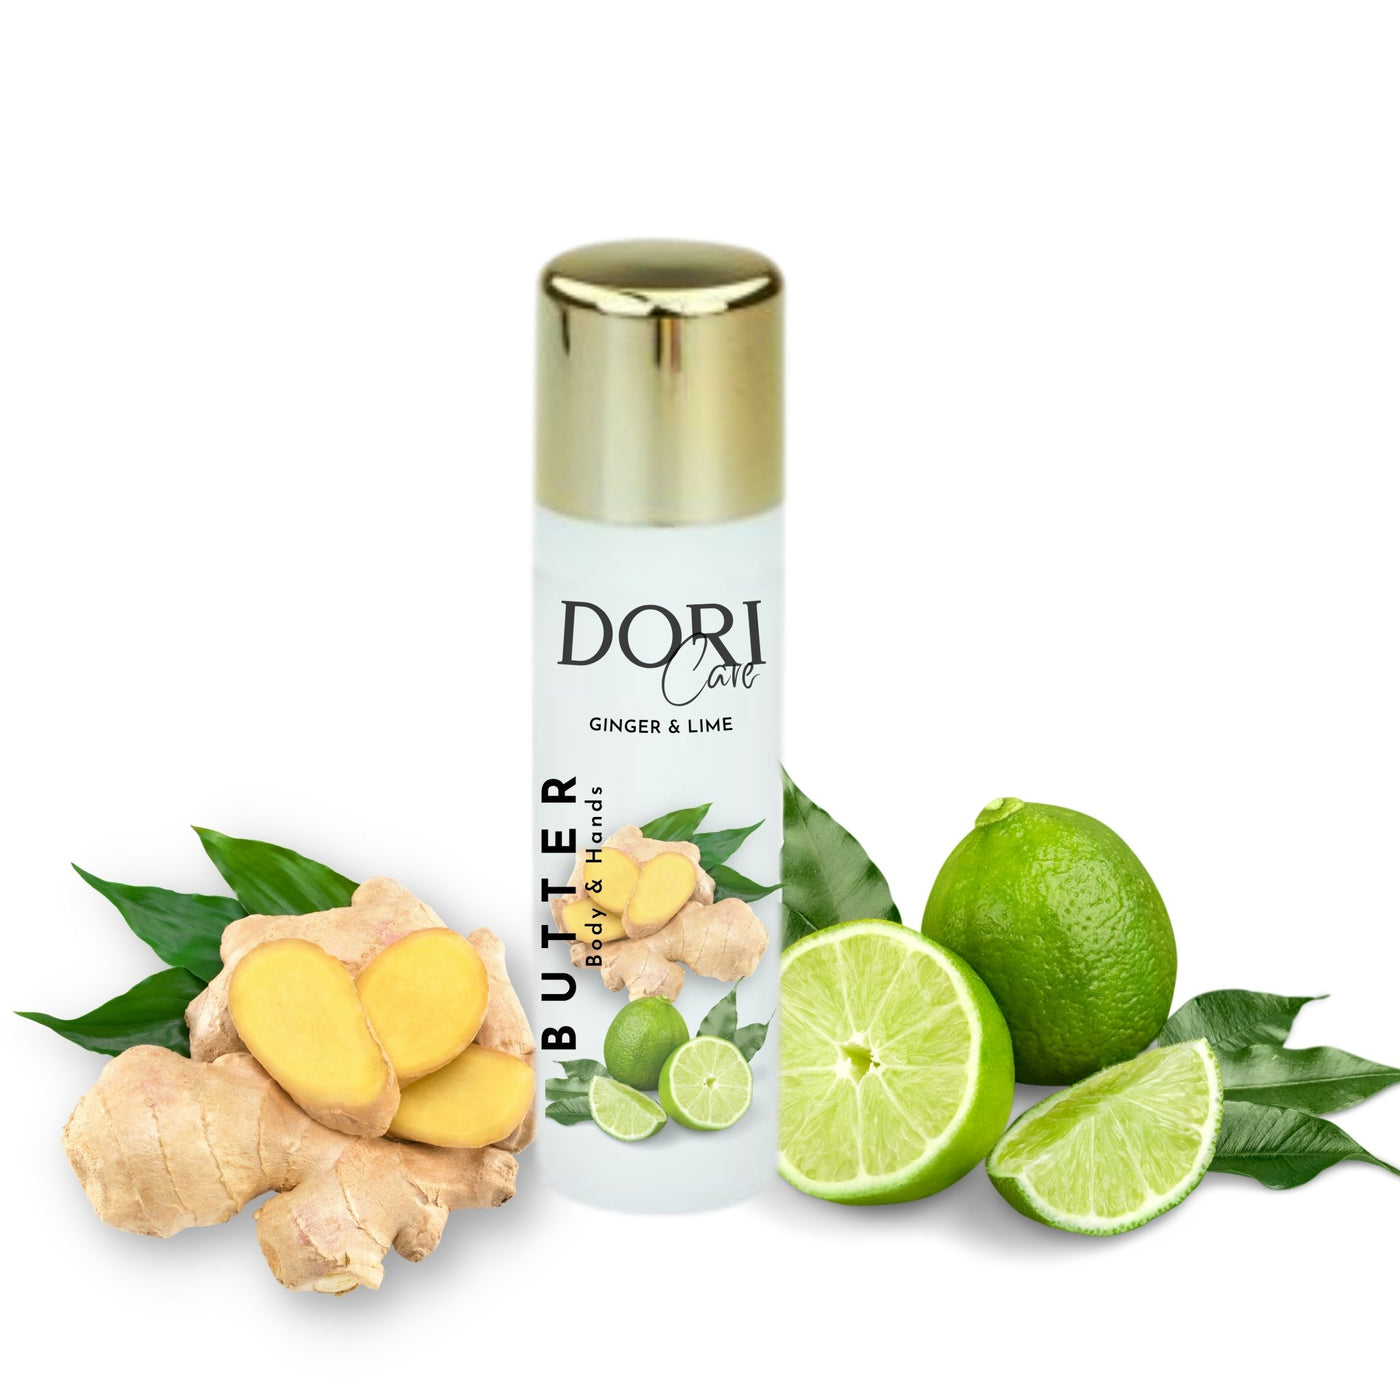 DORI Care BUTTER - Body & Hands  - Ginger & Lime - Doriana Cosmetics GmbH